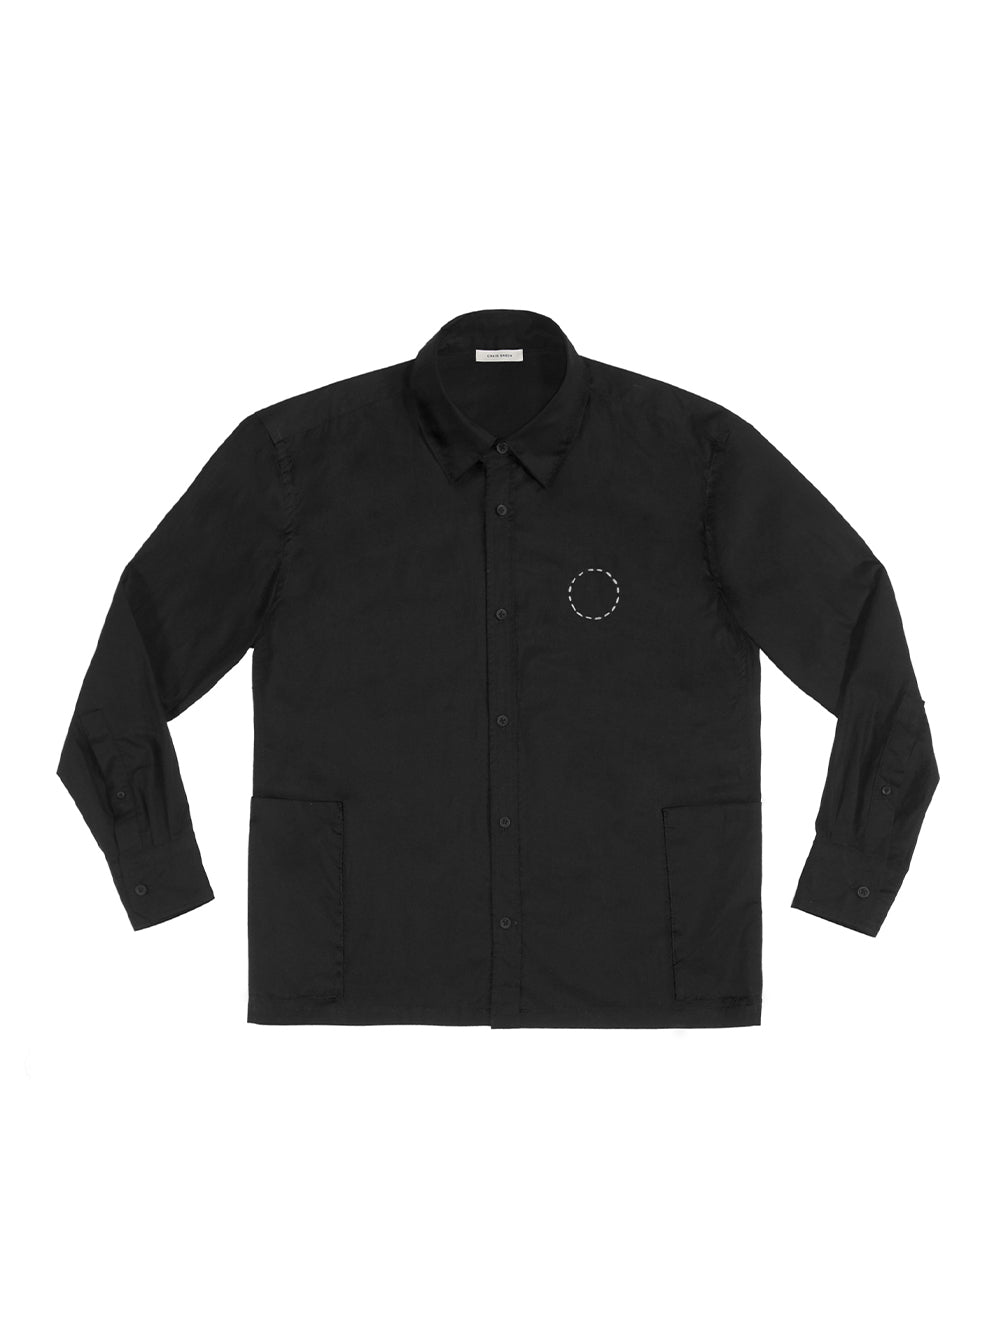 Circle Shirt (Black)